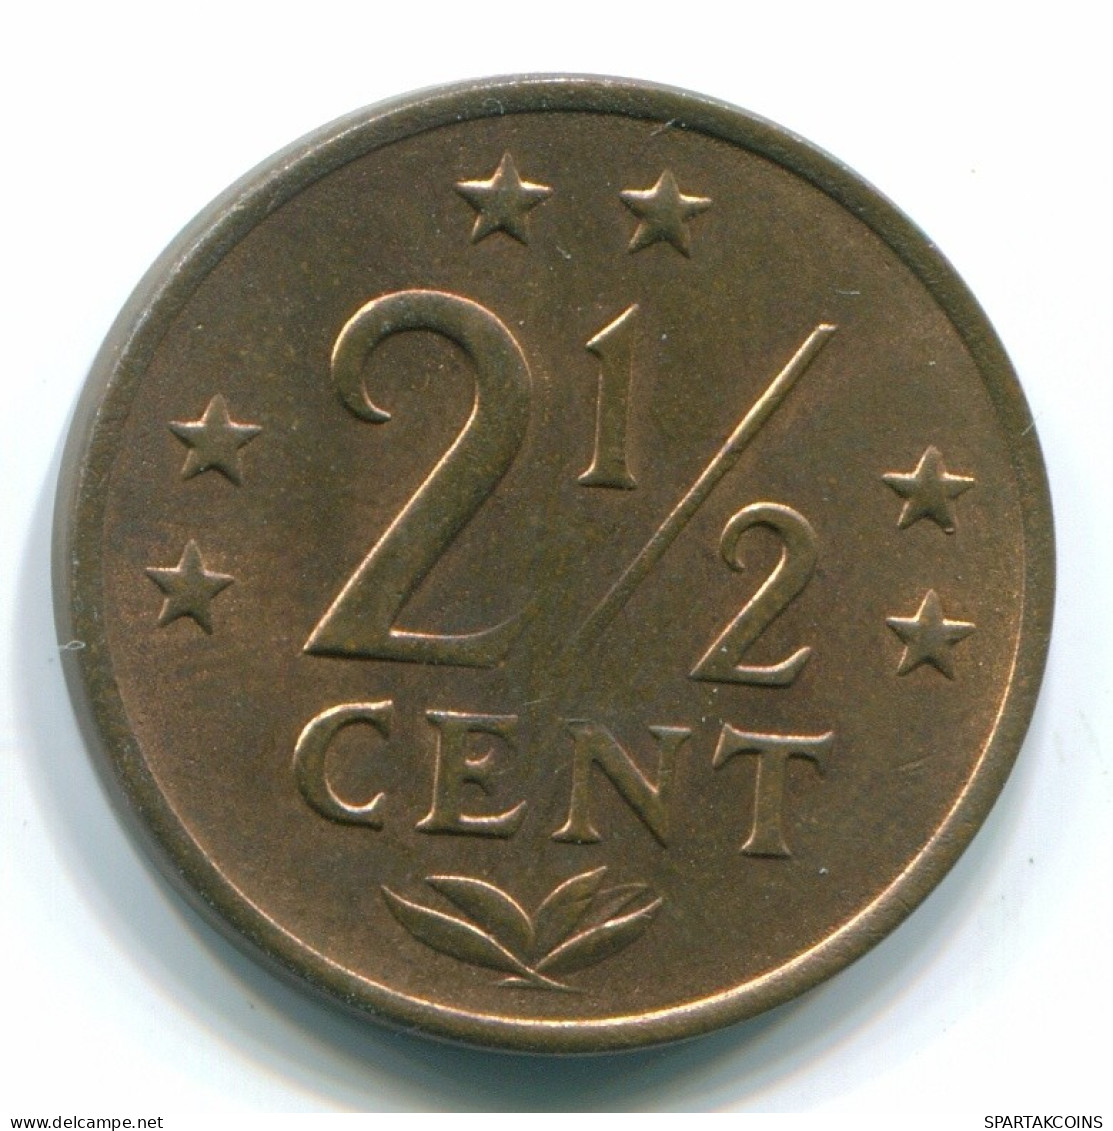 2 1/2 CENT 1971 NETHERLANDS ANTILLES Bronze Colonial Coin #S10487.U.A - Antille Olandesi